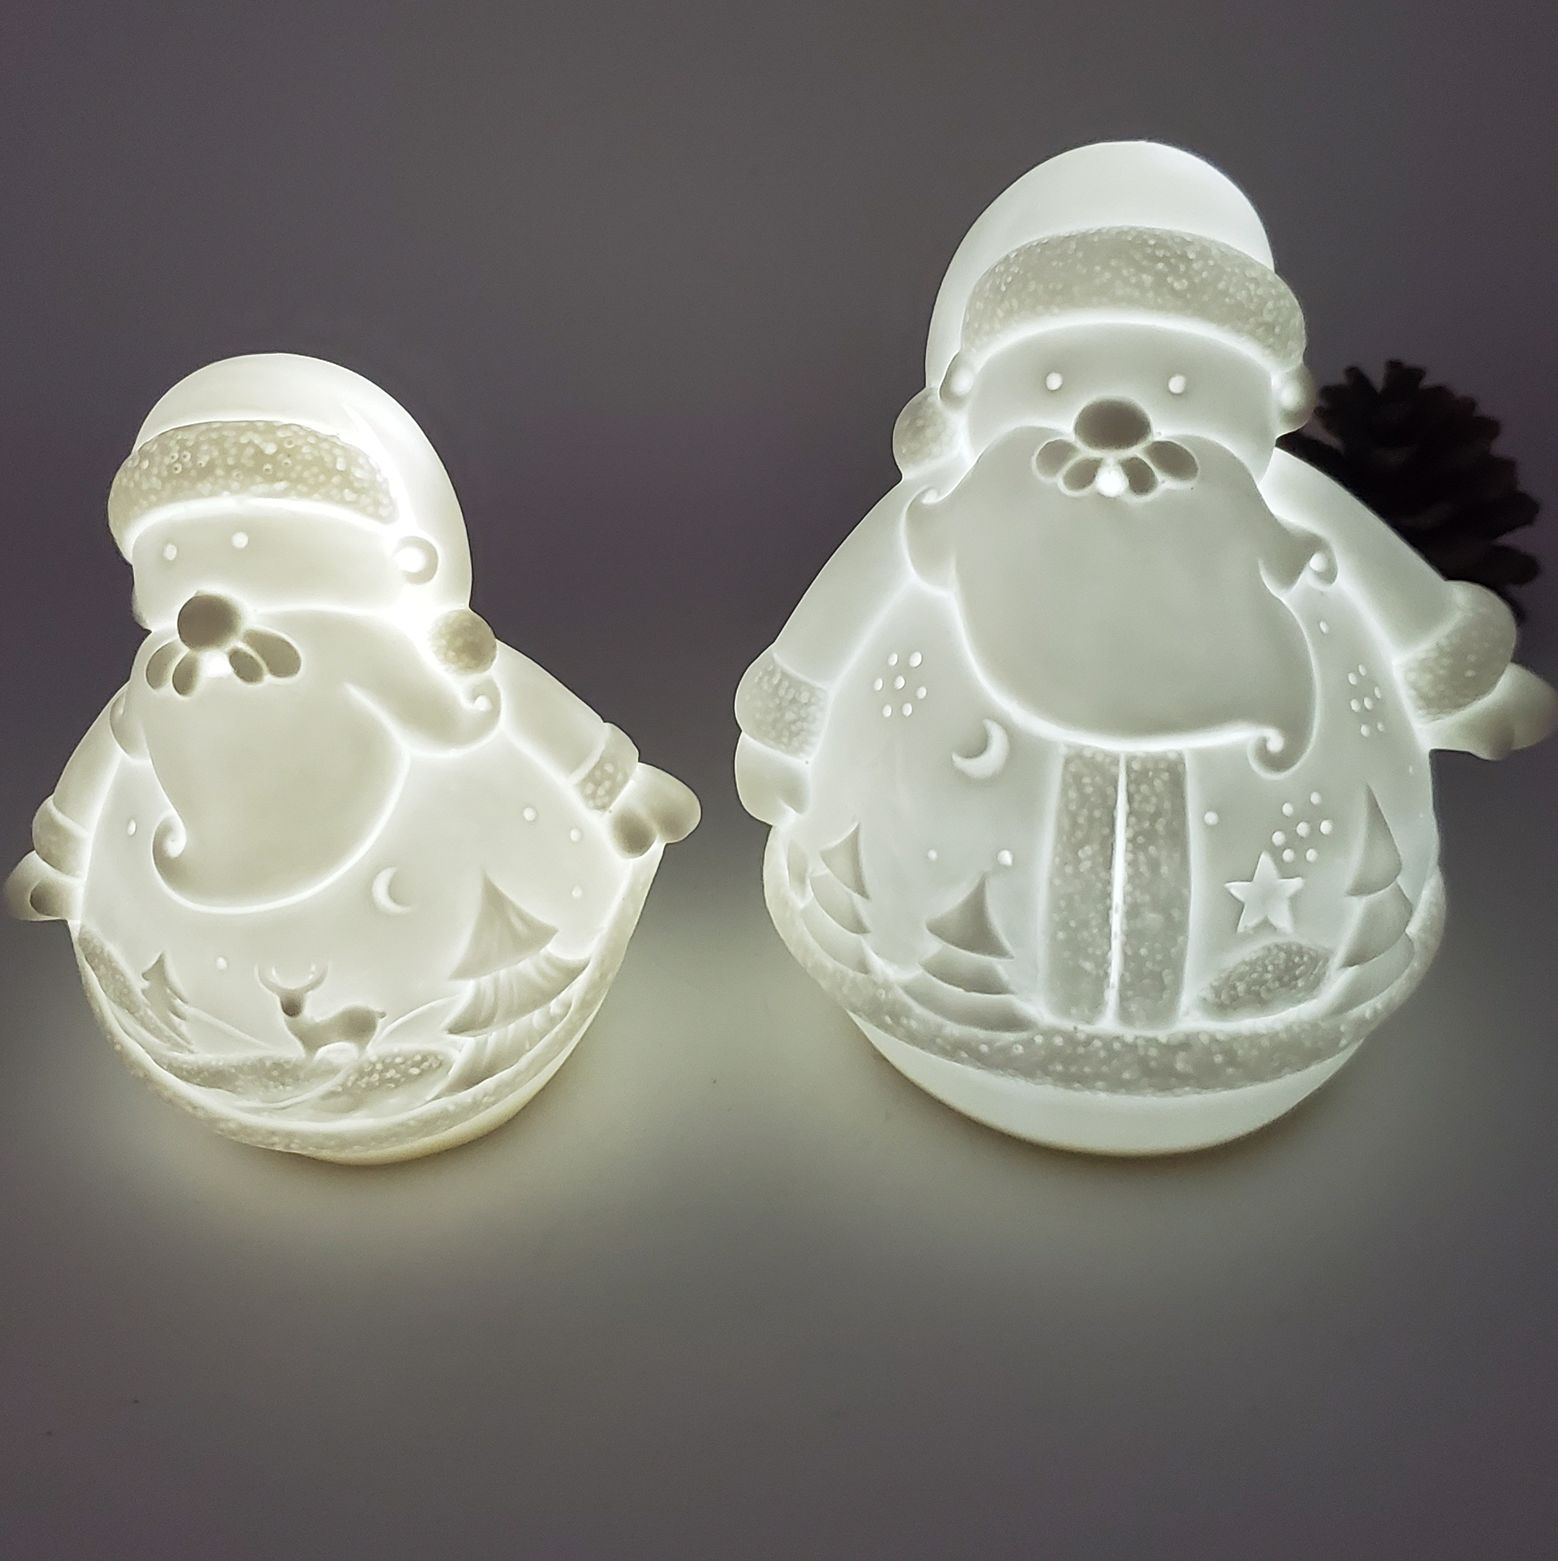 Stylish Cute Ceramic Night Light for Children